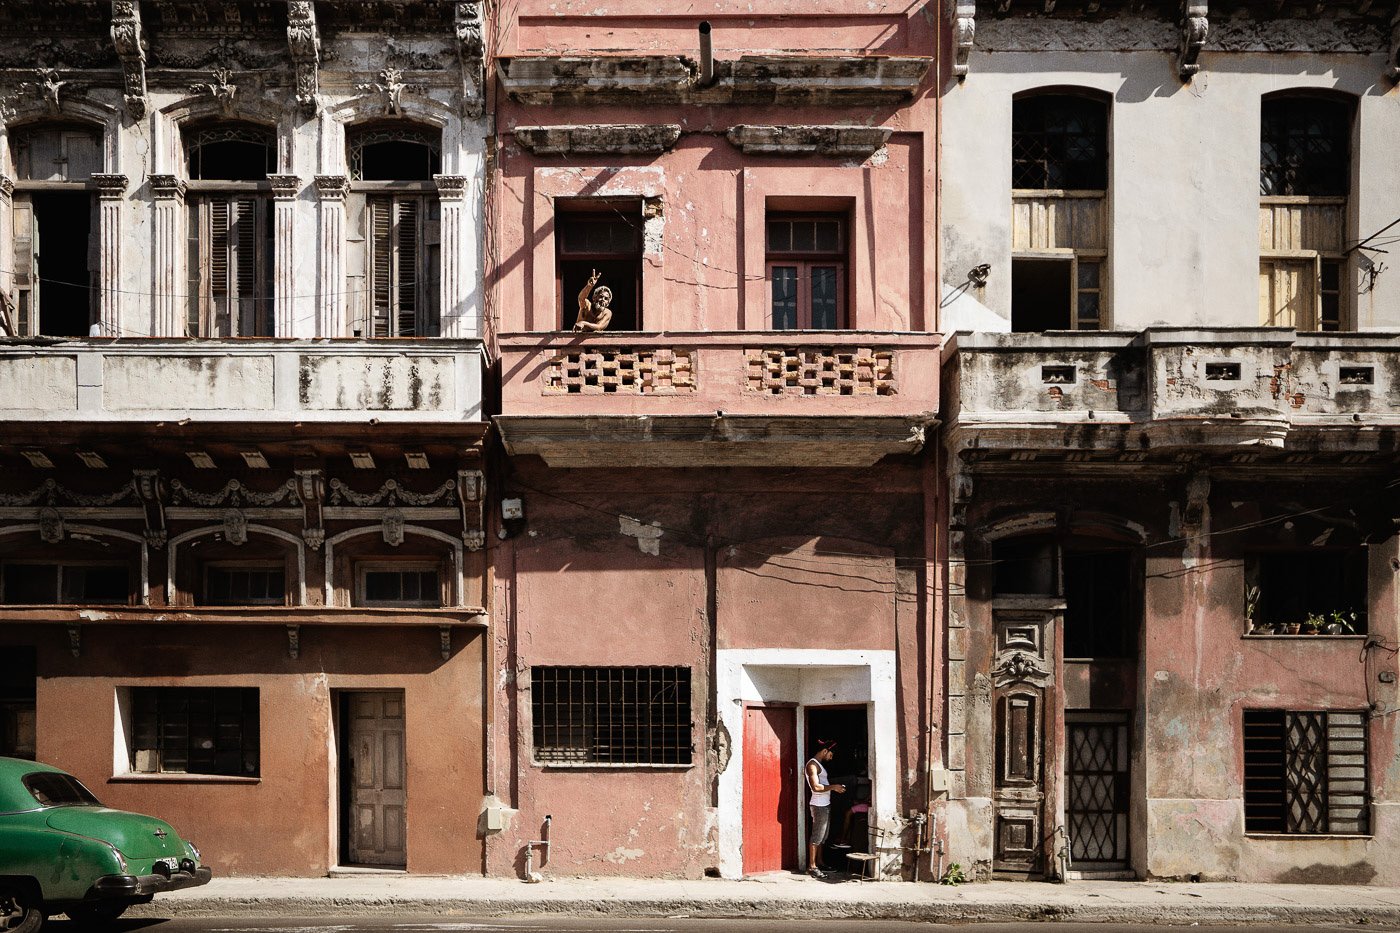 Malte Grüner’s “Viva La Cuba” Captures Cuba’s Old World Charm